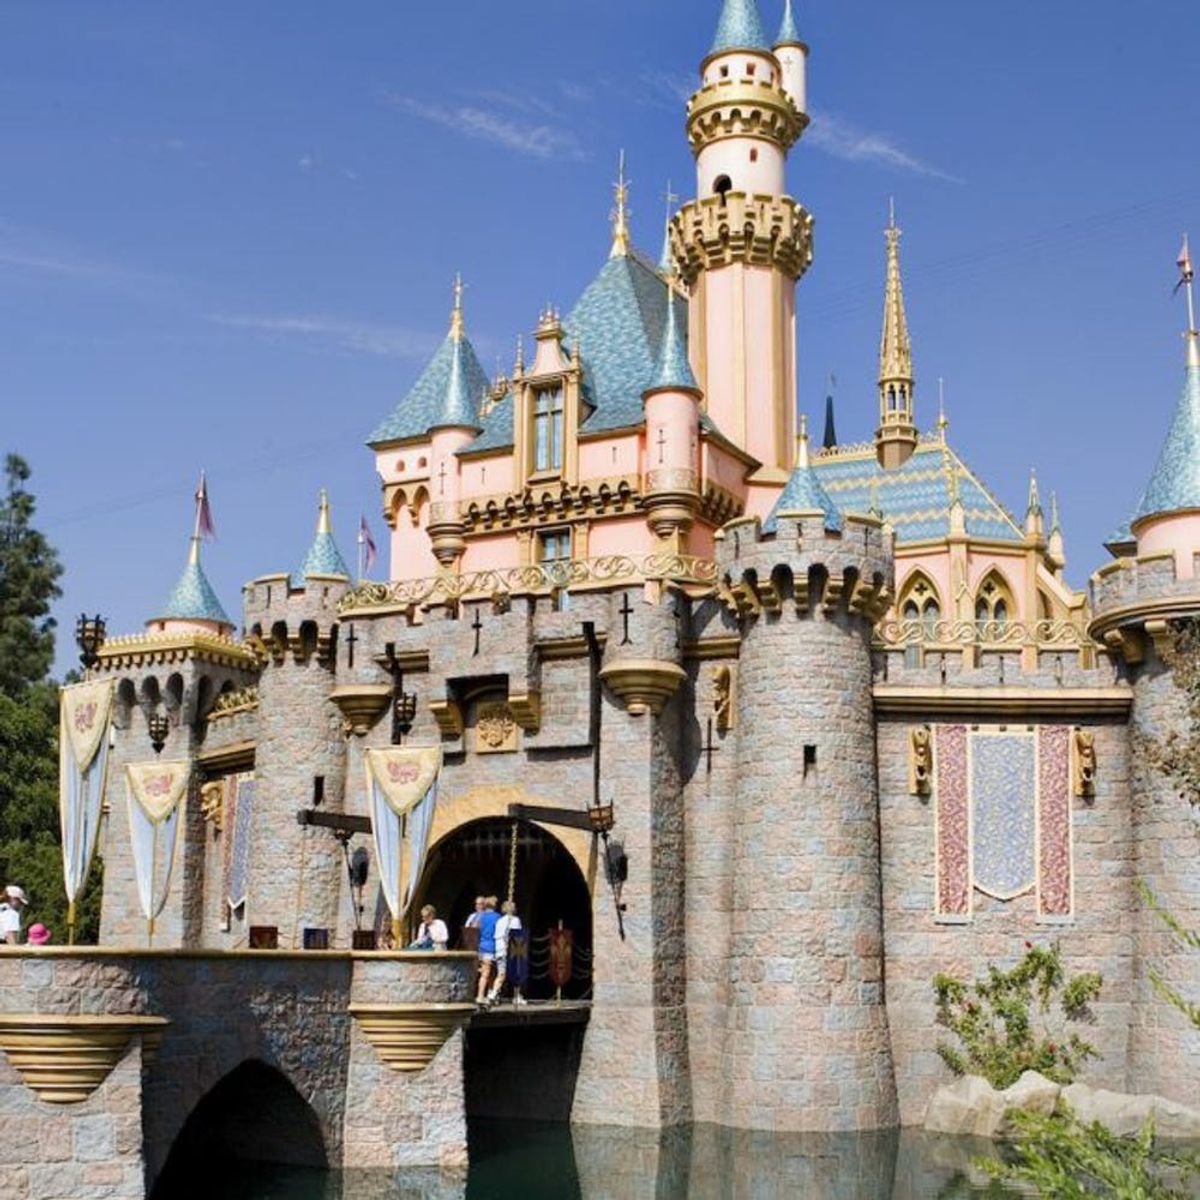 12 Hidden Gems to Look for at Disneyland